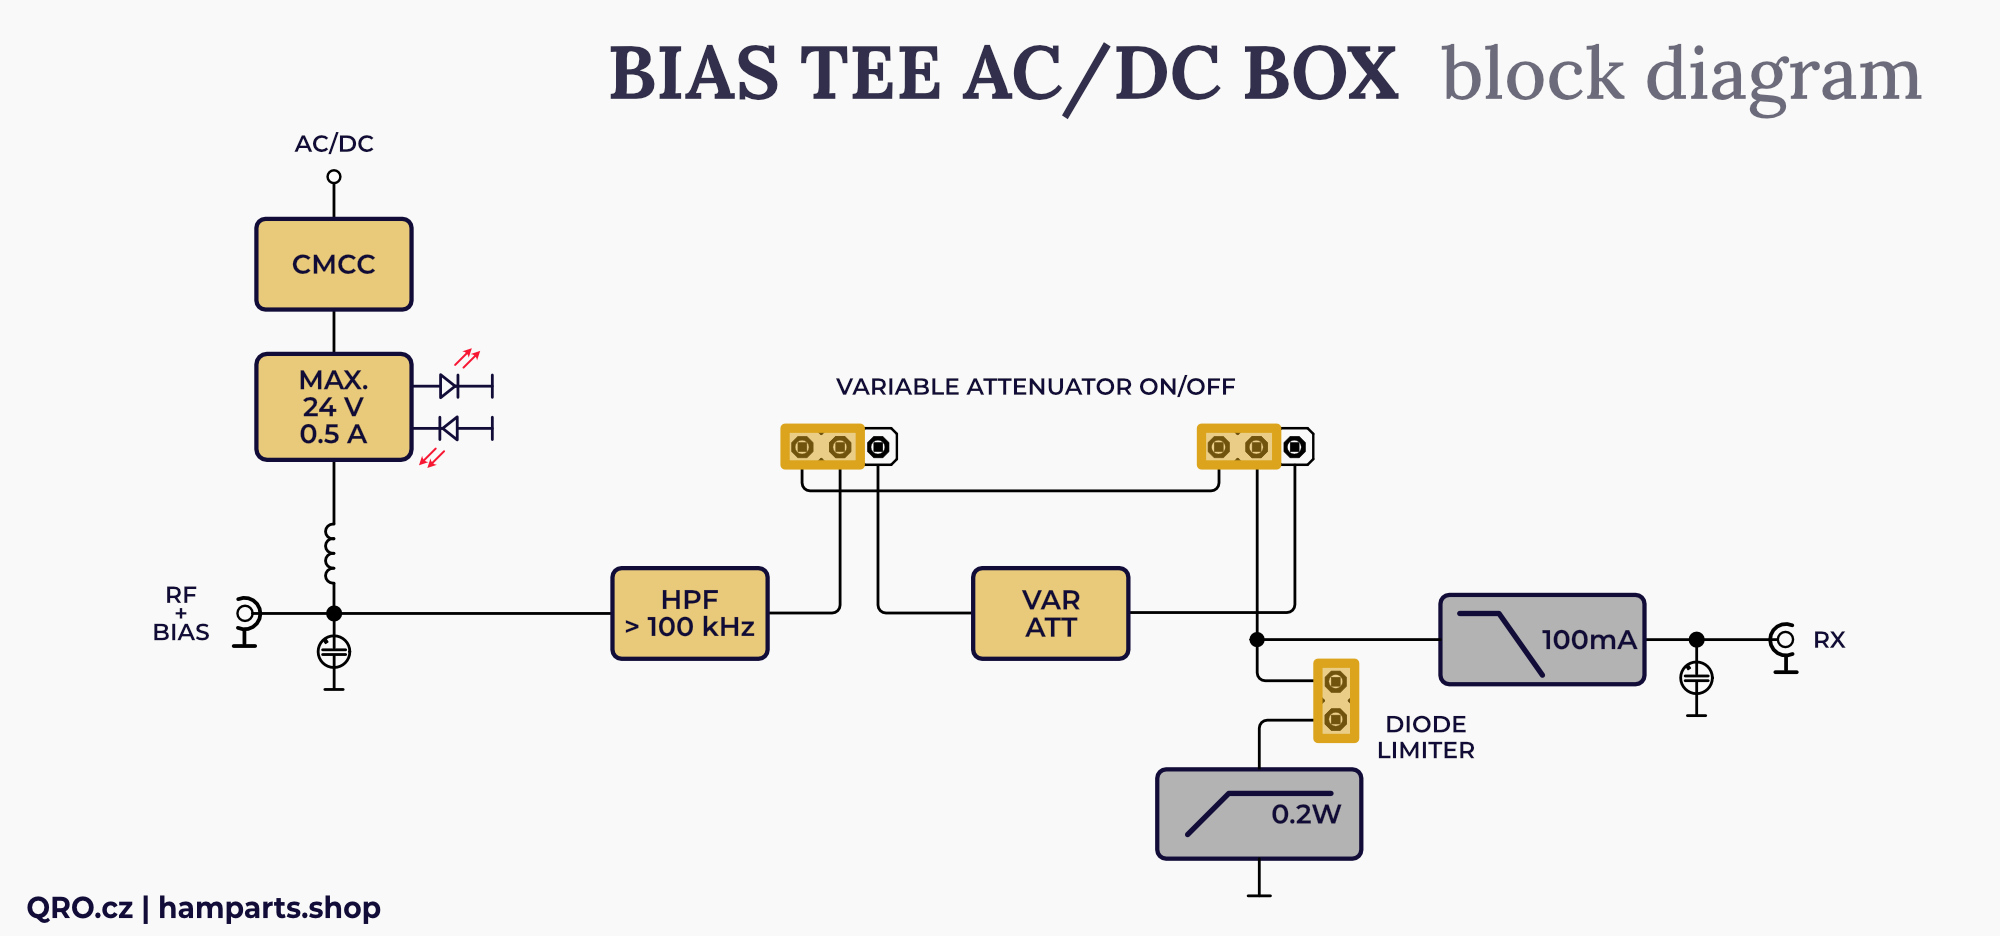 bias tee box acdc block diagram qro.cz hamparts.shop